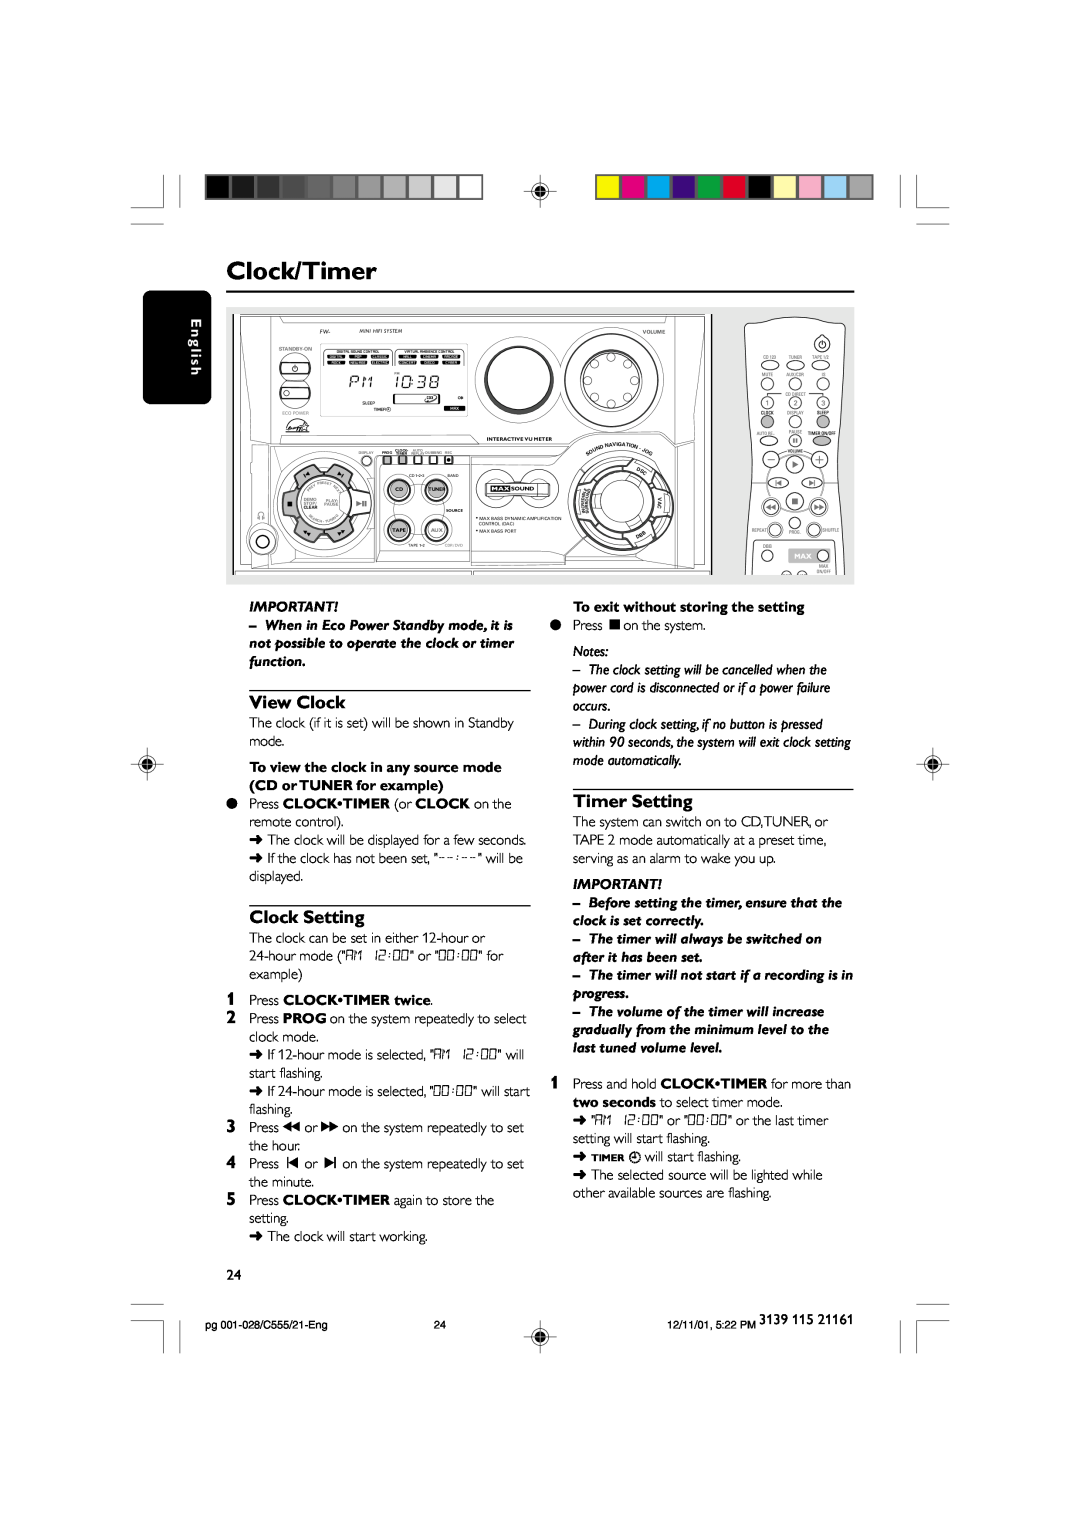 Philips C555 manual Clock/Timer, View Clock, Clock Setting, Timer Setting, Press CLOCK TIMER or CLOCK on the remote control 